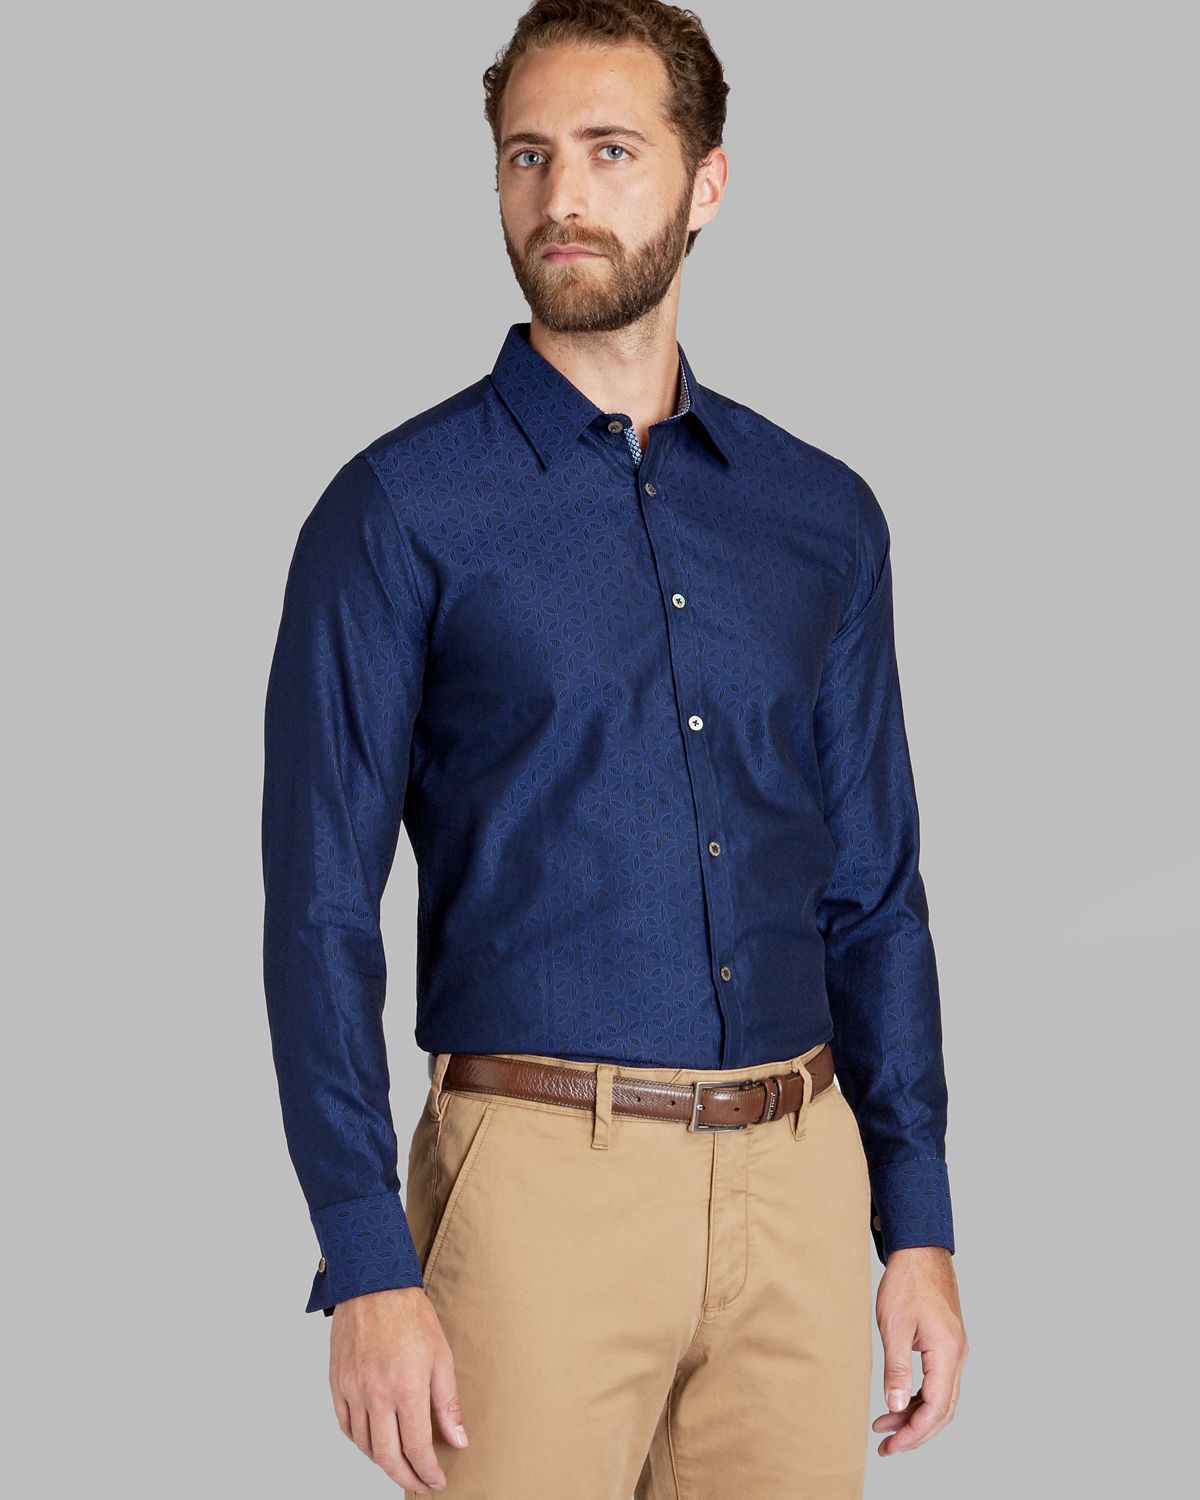 Lyst - Ted Baker Teejay Jacquard Print Dress Shirt Regular Fit in Blue ...